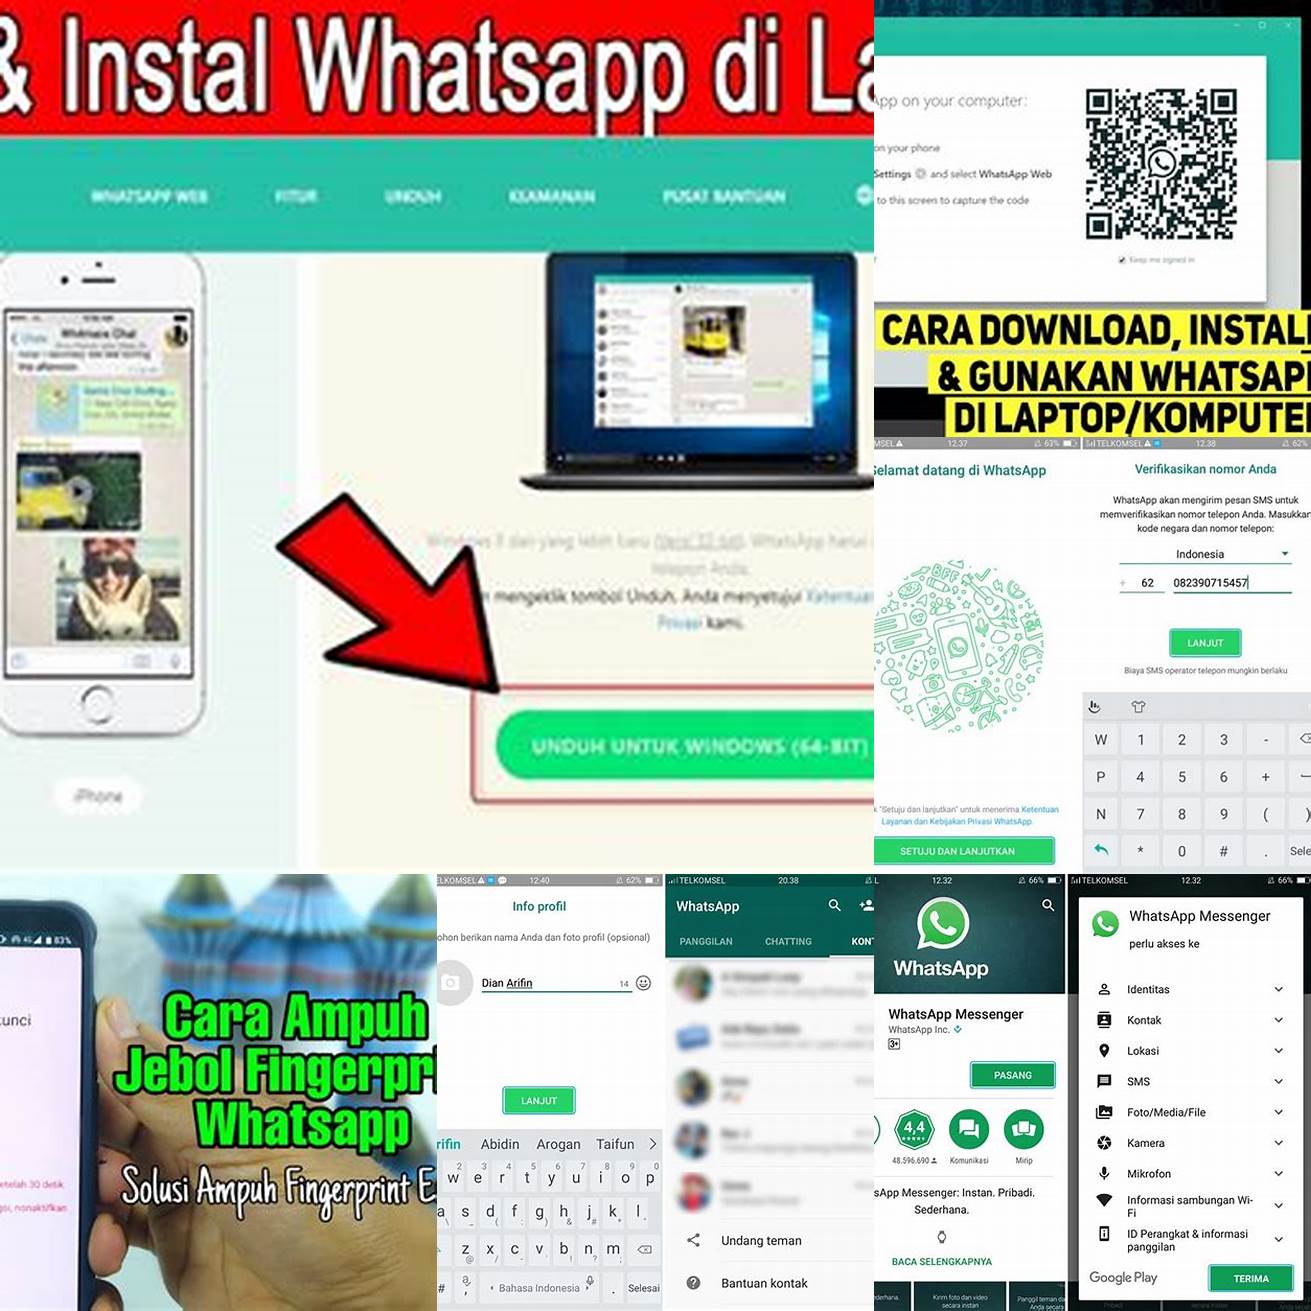 5 Buka aplikasi WhatsApp dan daftar